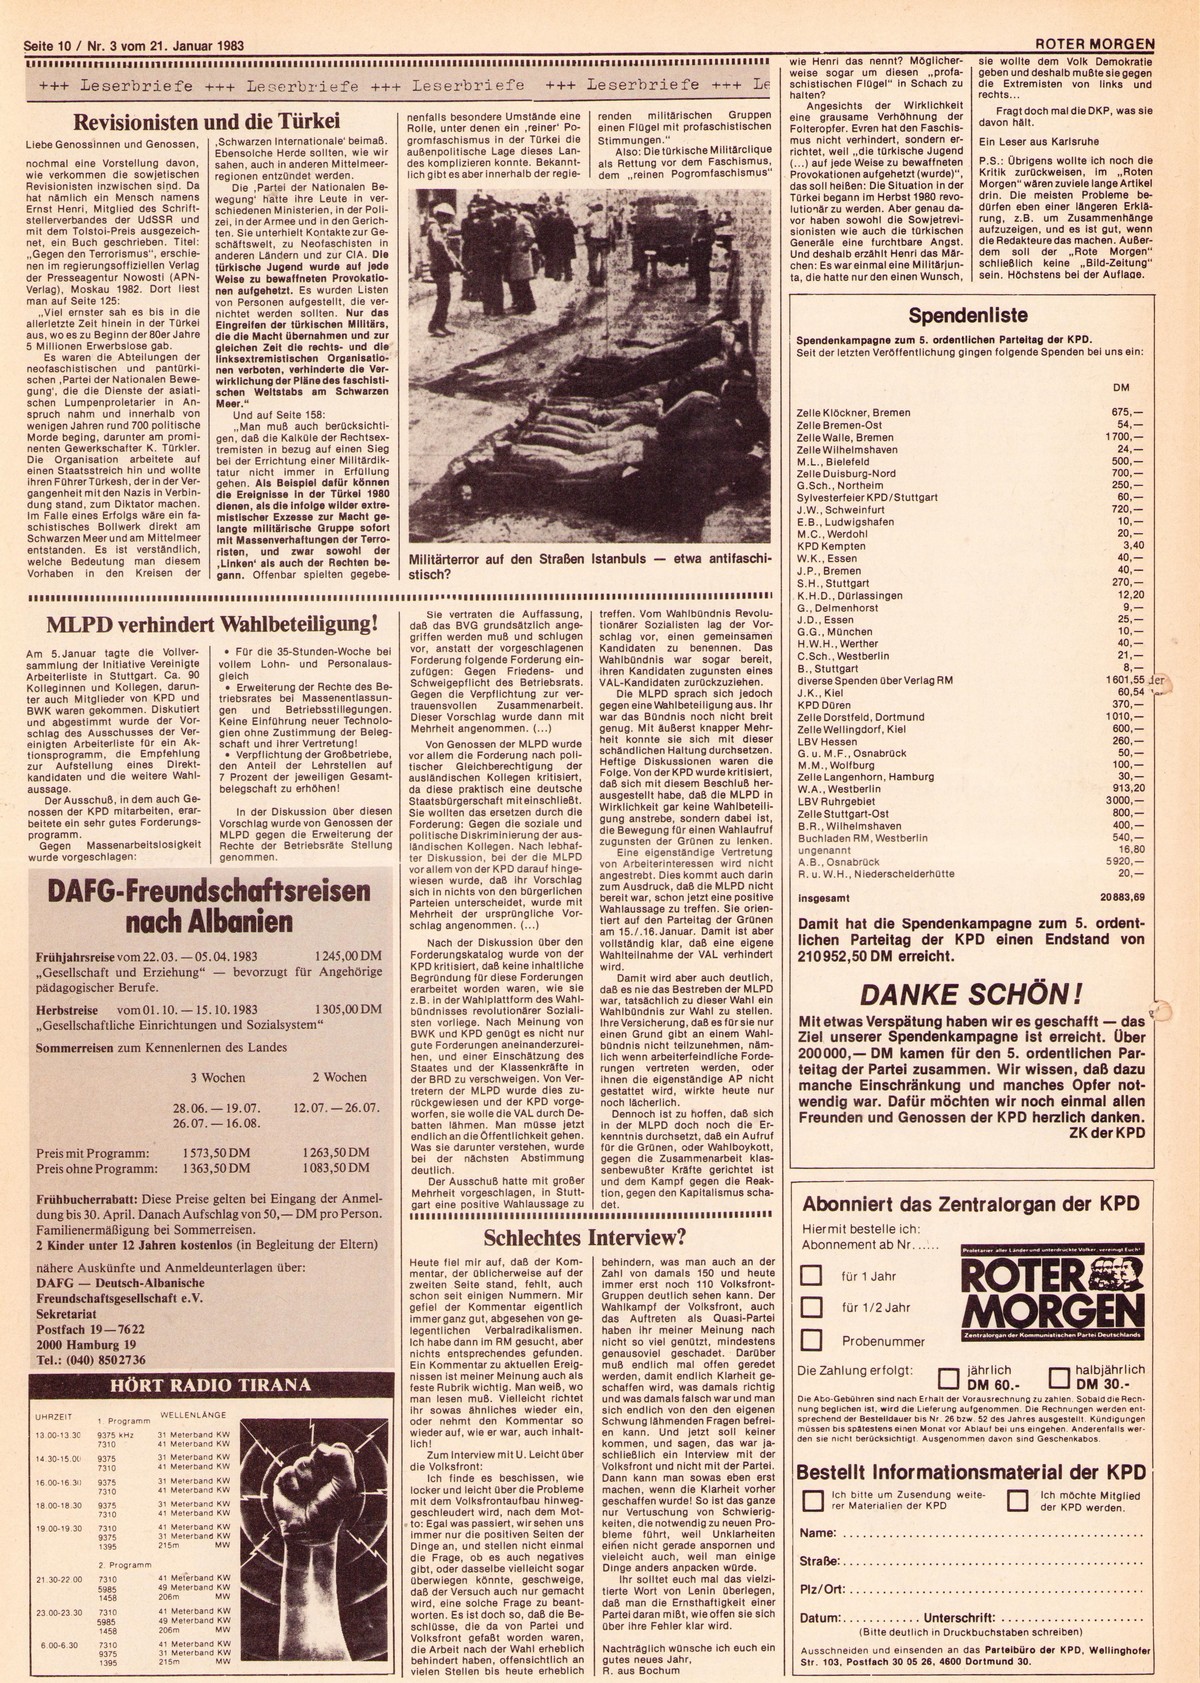 Roter Morgen, 17. Jg., 22. Januar 1983, Nr. 3, Seite 10